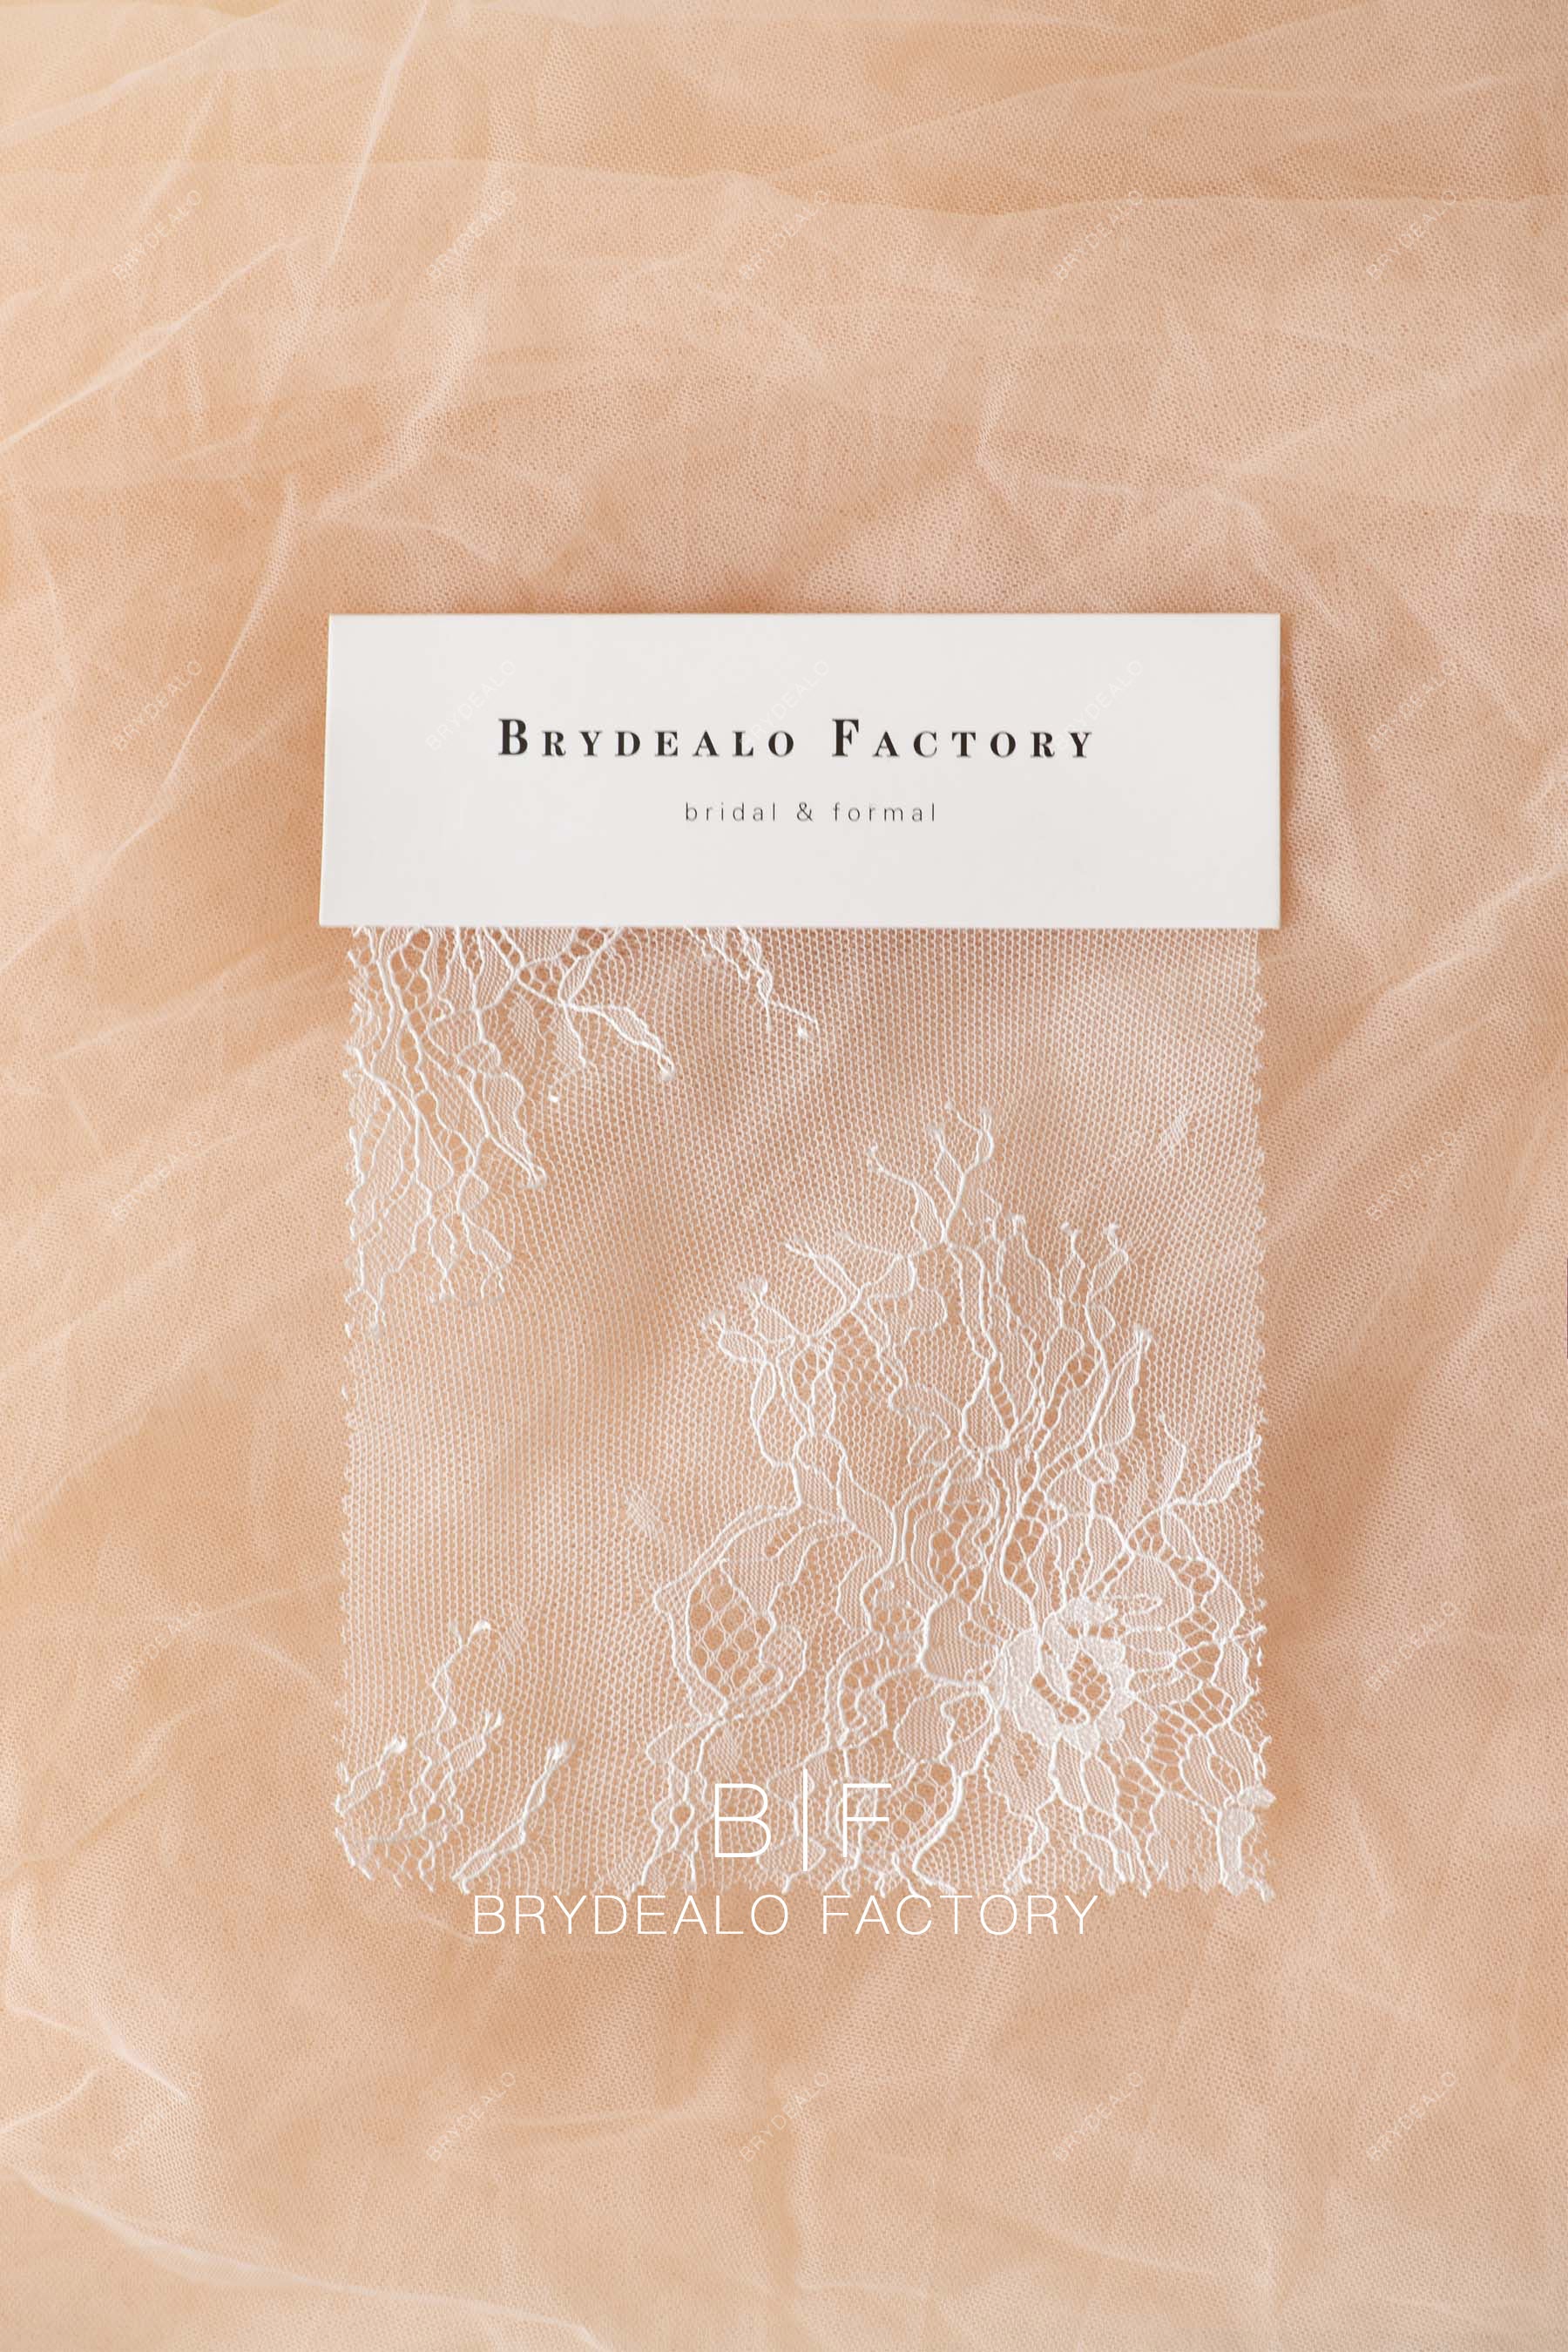 flower dot motif lace fabric swatch